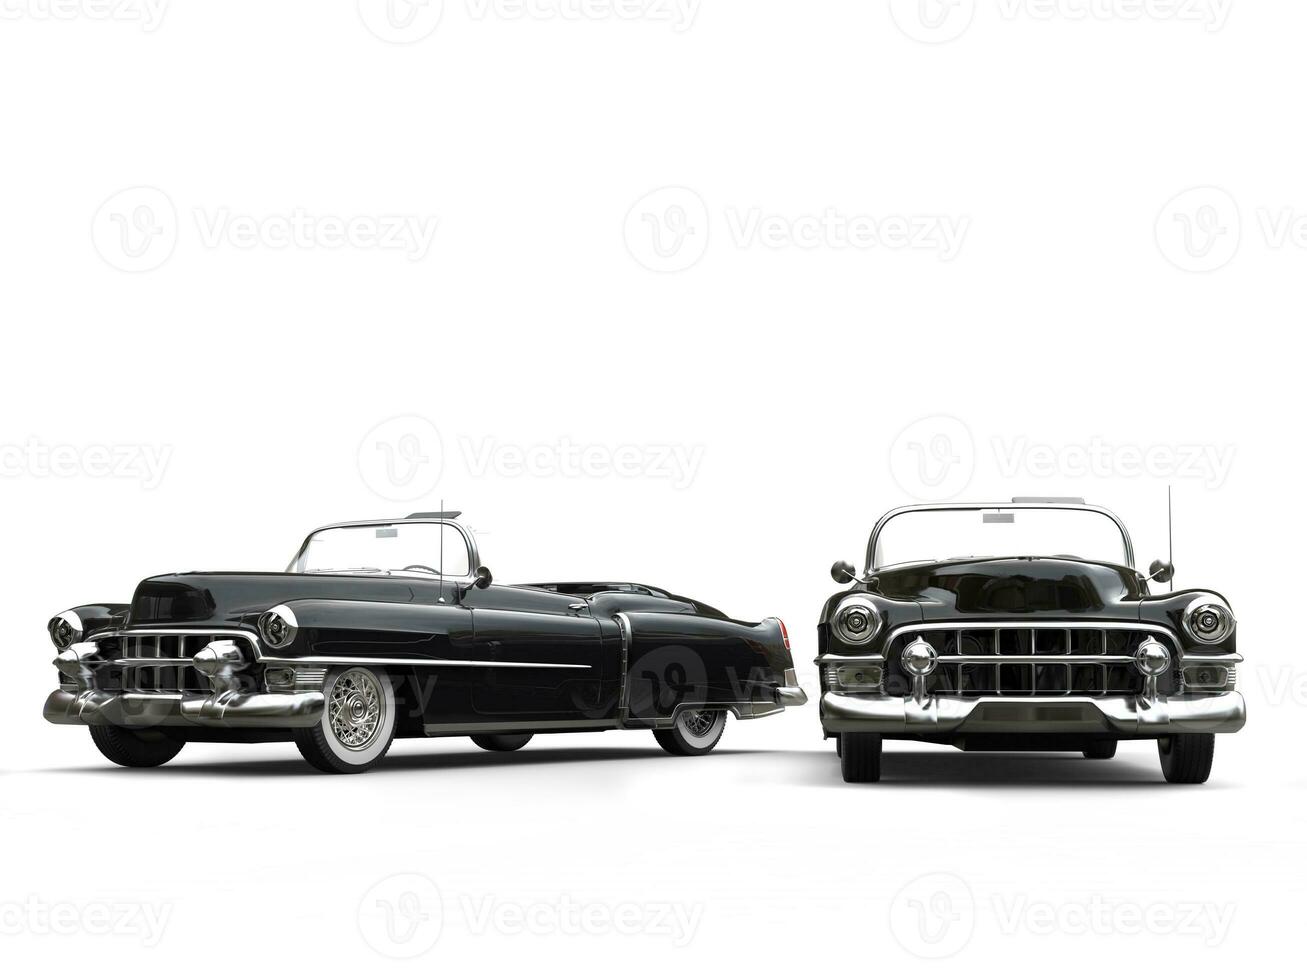 zwei genial schwarz Jahrgang Autos - - Studio Beleuchtung Schuss foto